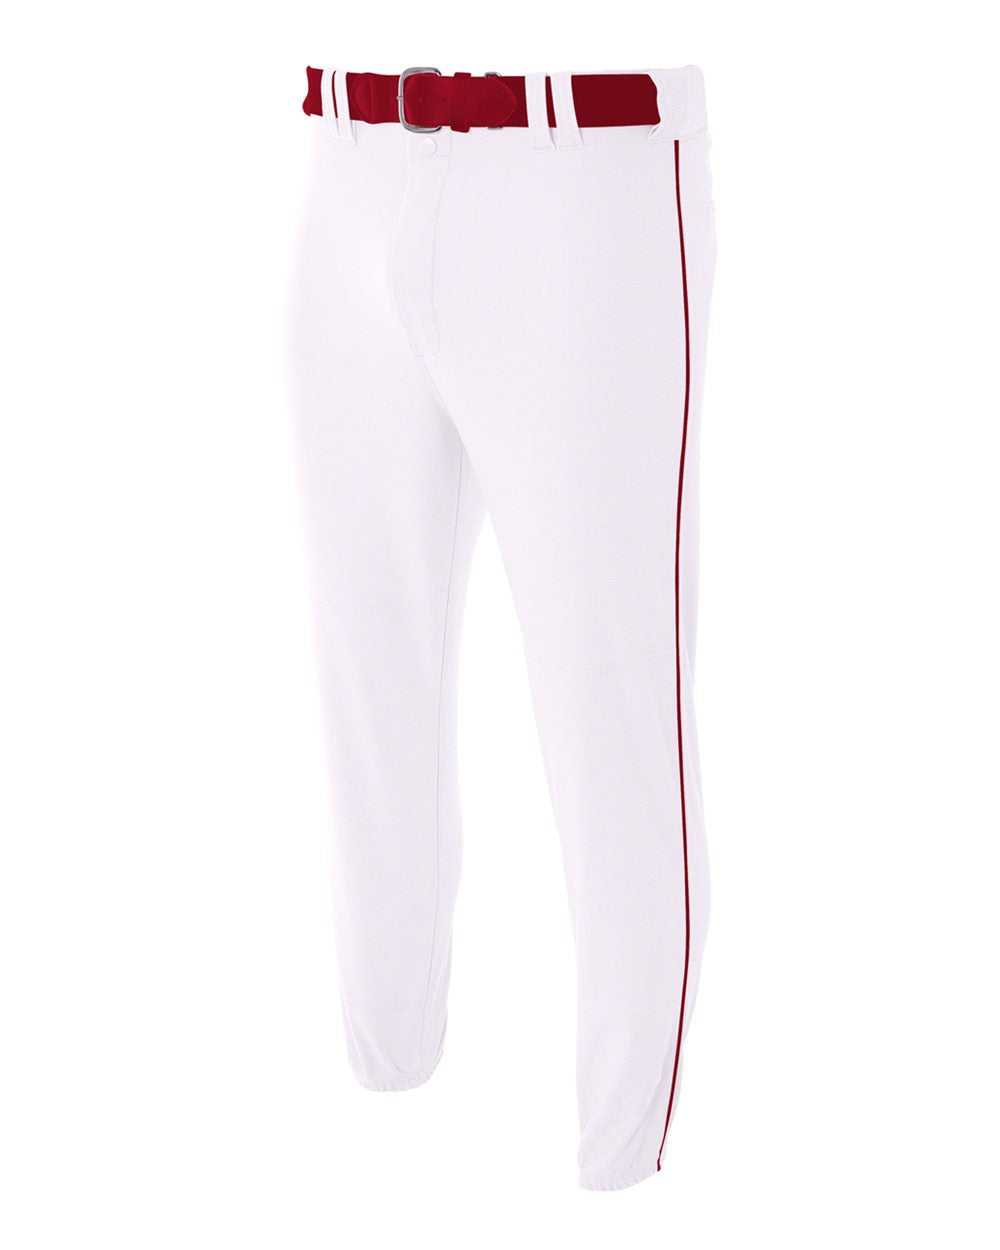 A4 NB6178 Youth Pro Style Elastic Bottom Baseball Pant - White Cardinal - HIT a Double